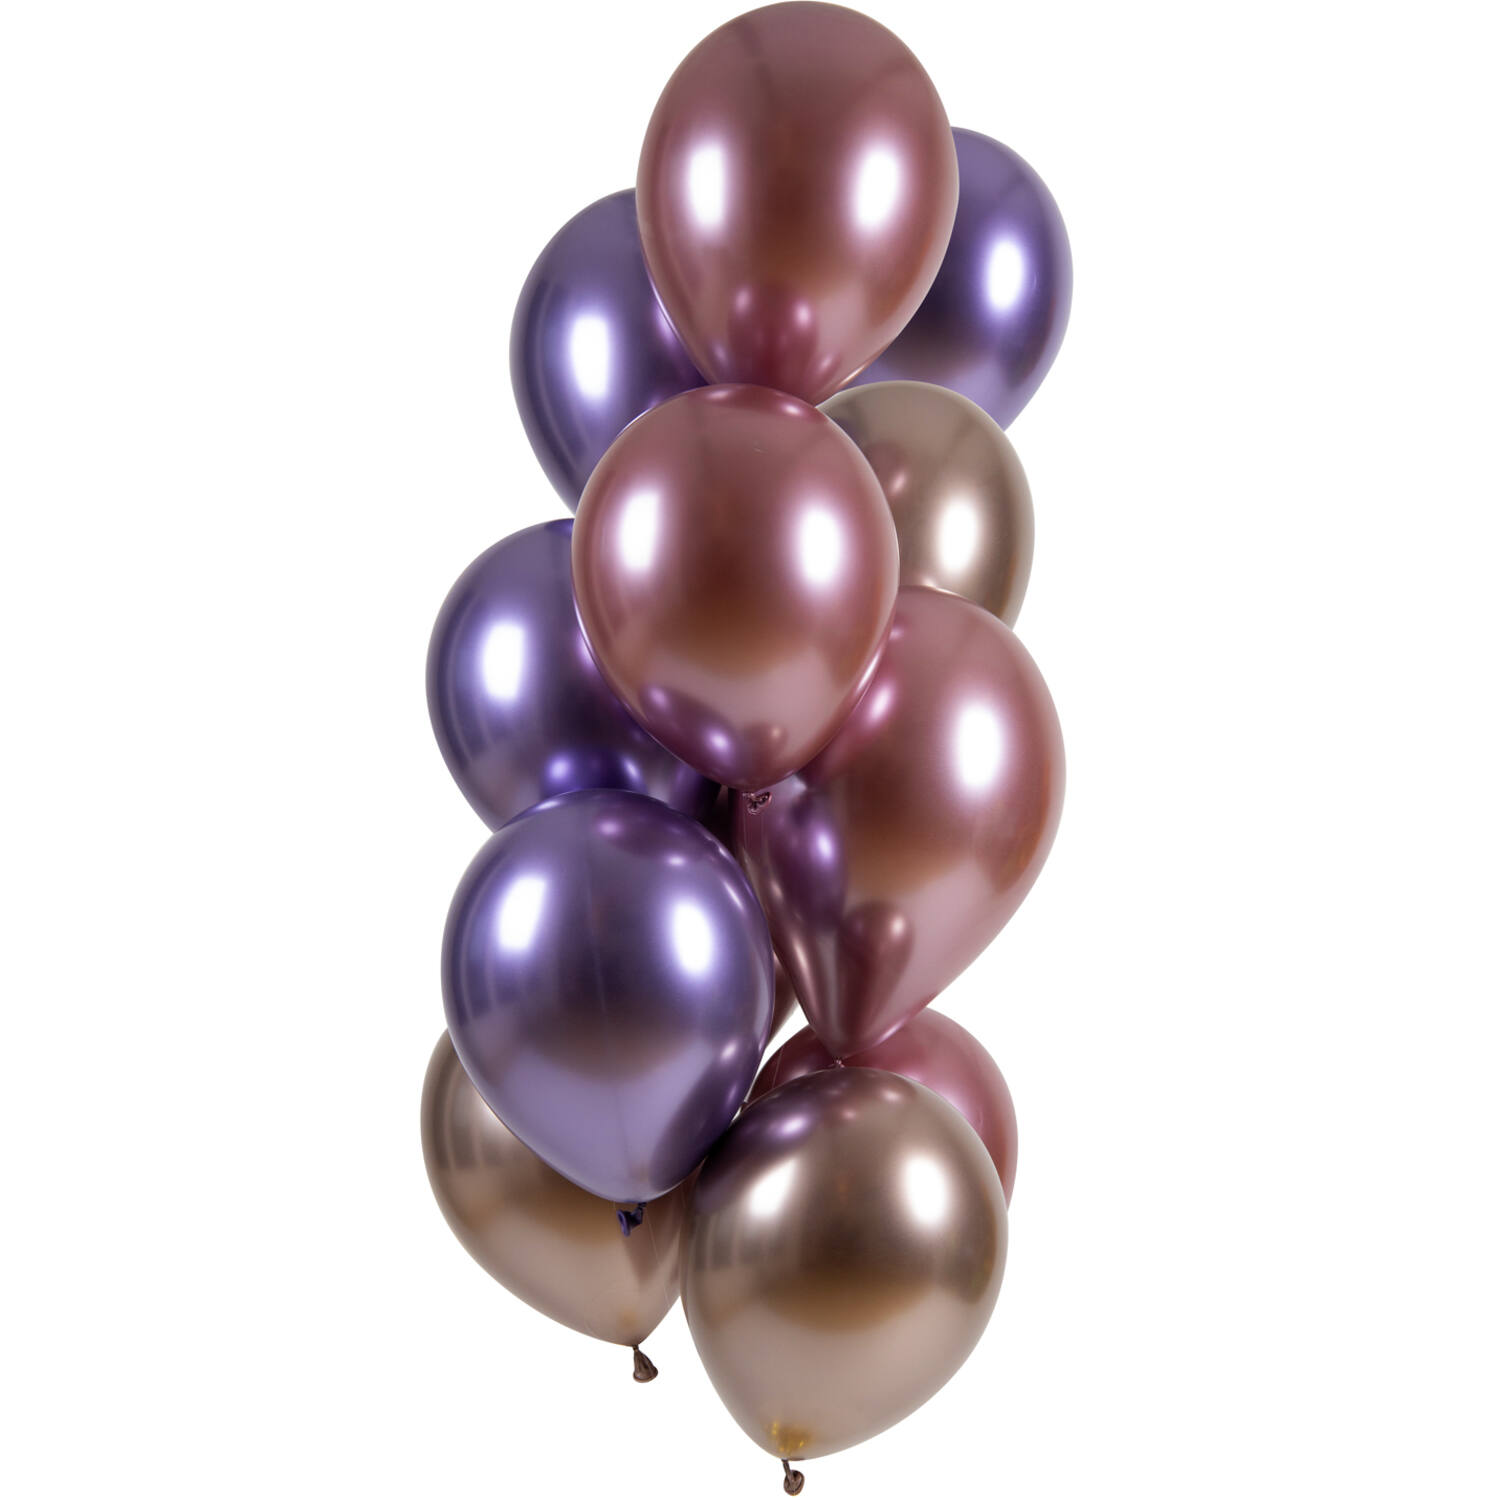 NEU Premium-Latex-Luftballons Ultra Shine Amethyst, 33cm, 12 Stk.